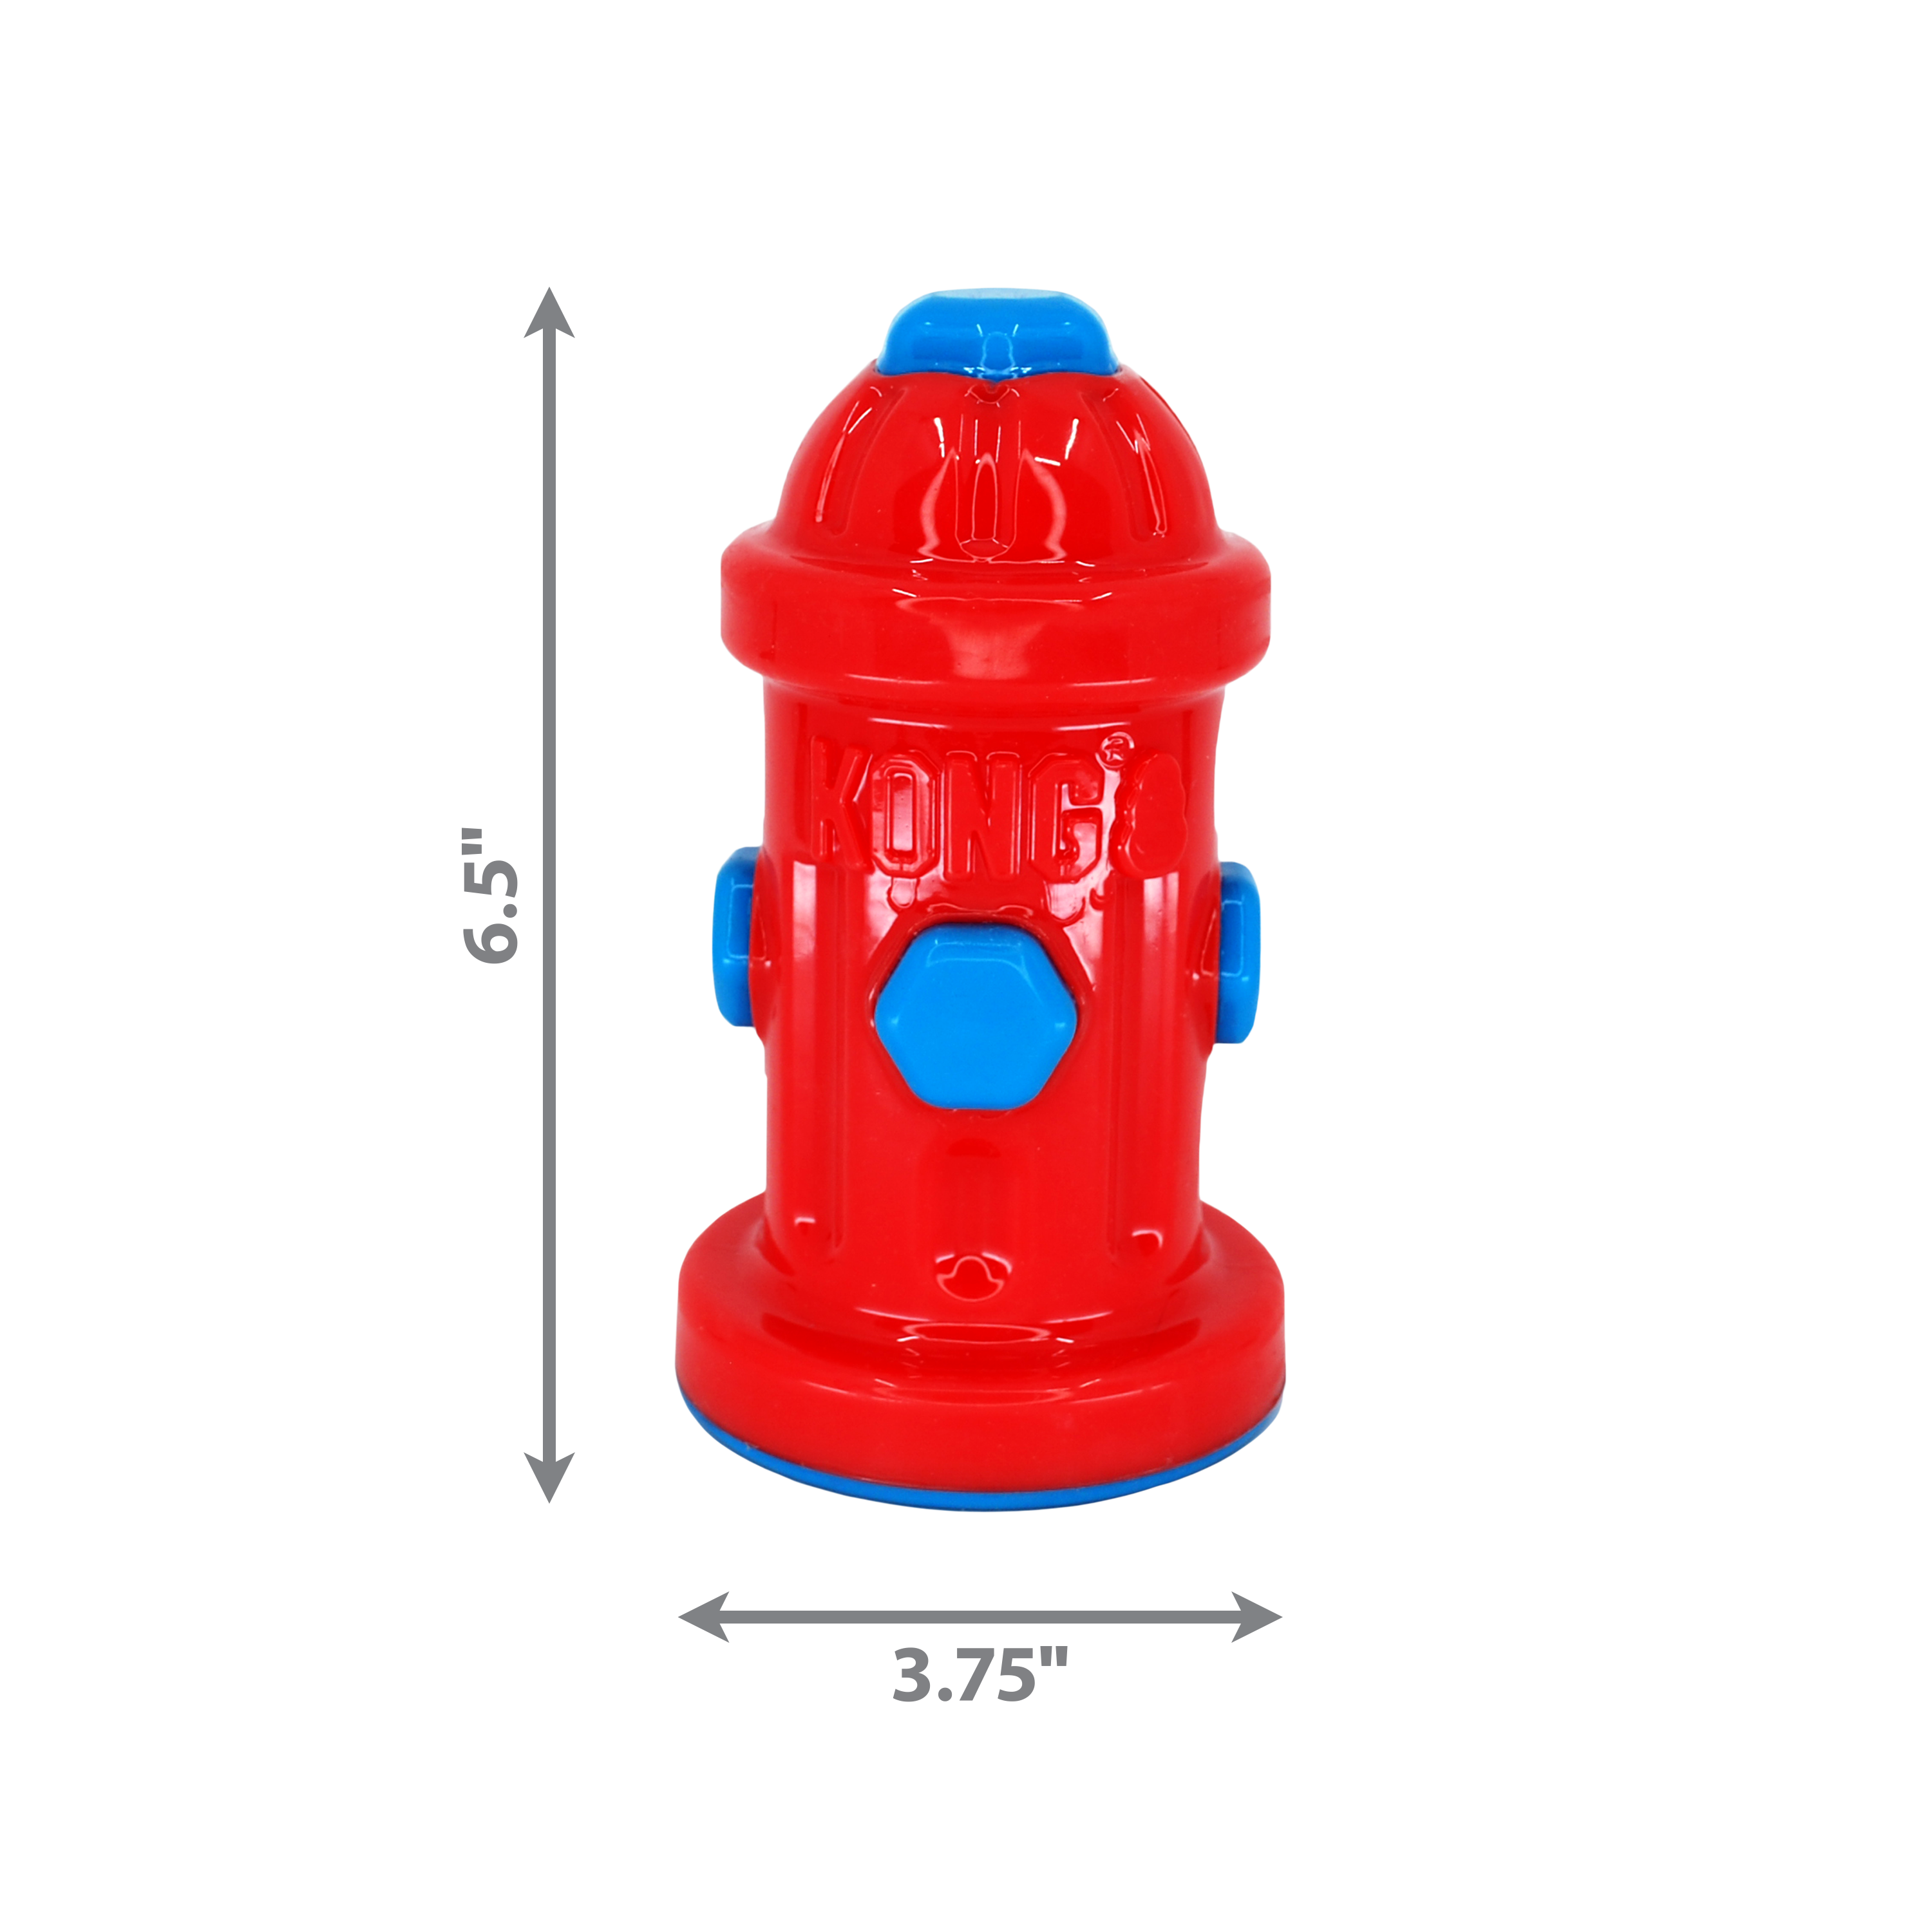 Eon Fire Hydrant dimoffpack Produktbild